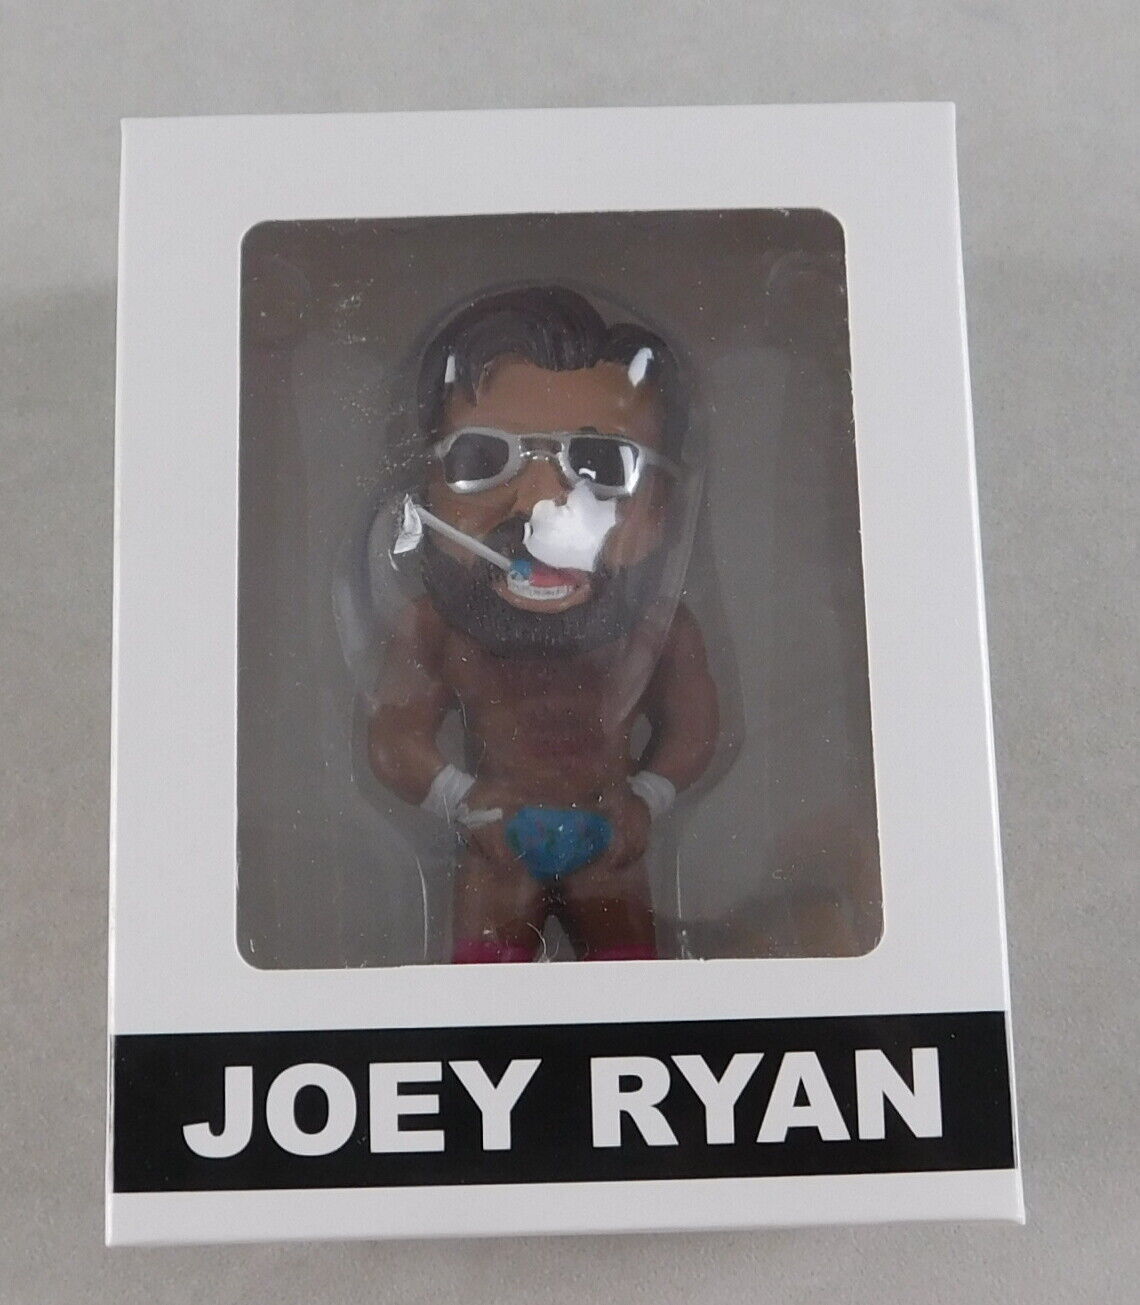 2019 Pro Wrestling Loot Wrestling Superstars Joey Ryan